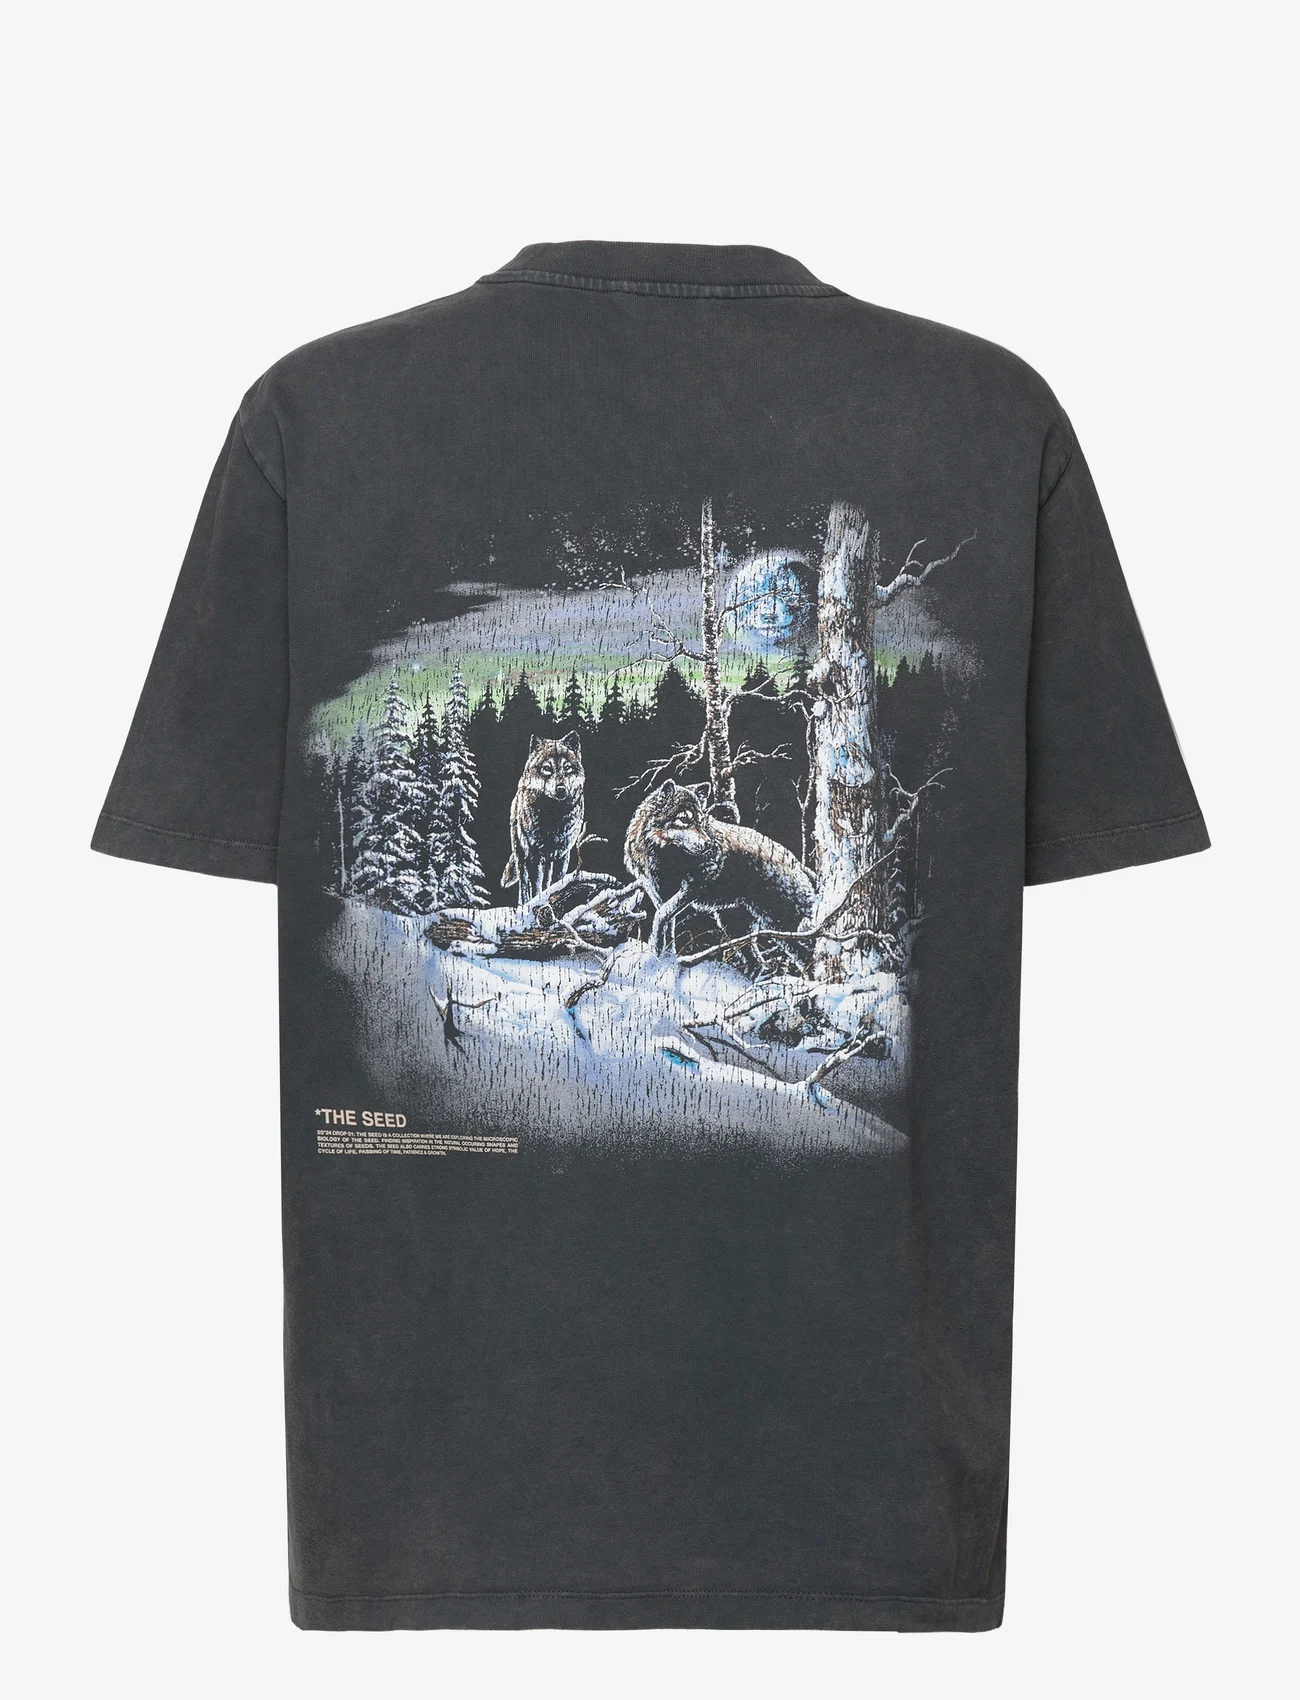 HOLZWEILER - Kjerag National Tee - t-shirt & tops - grey - 1